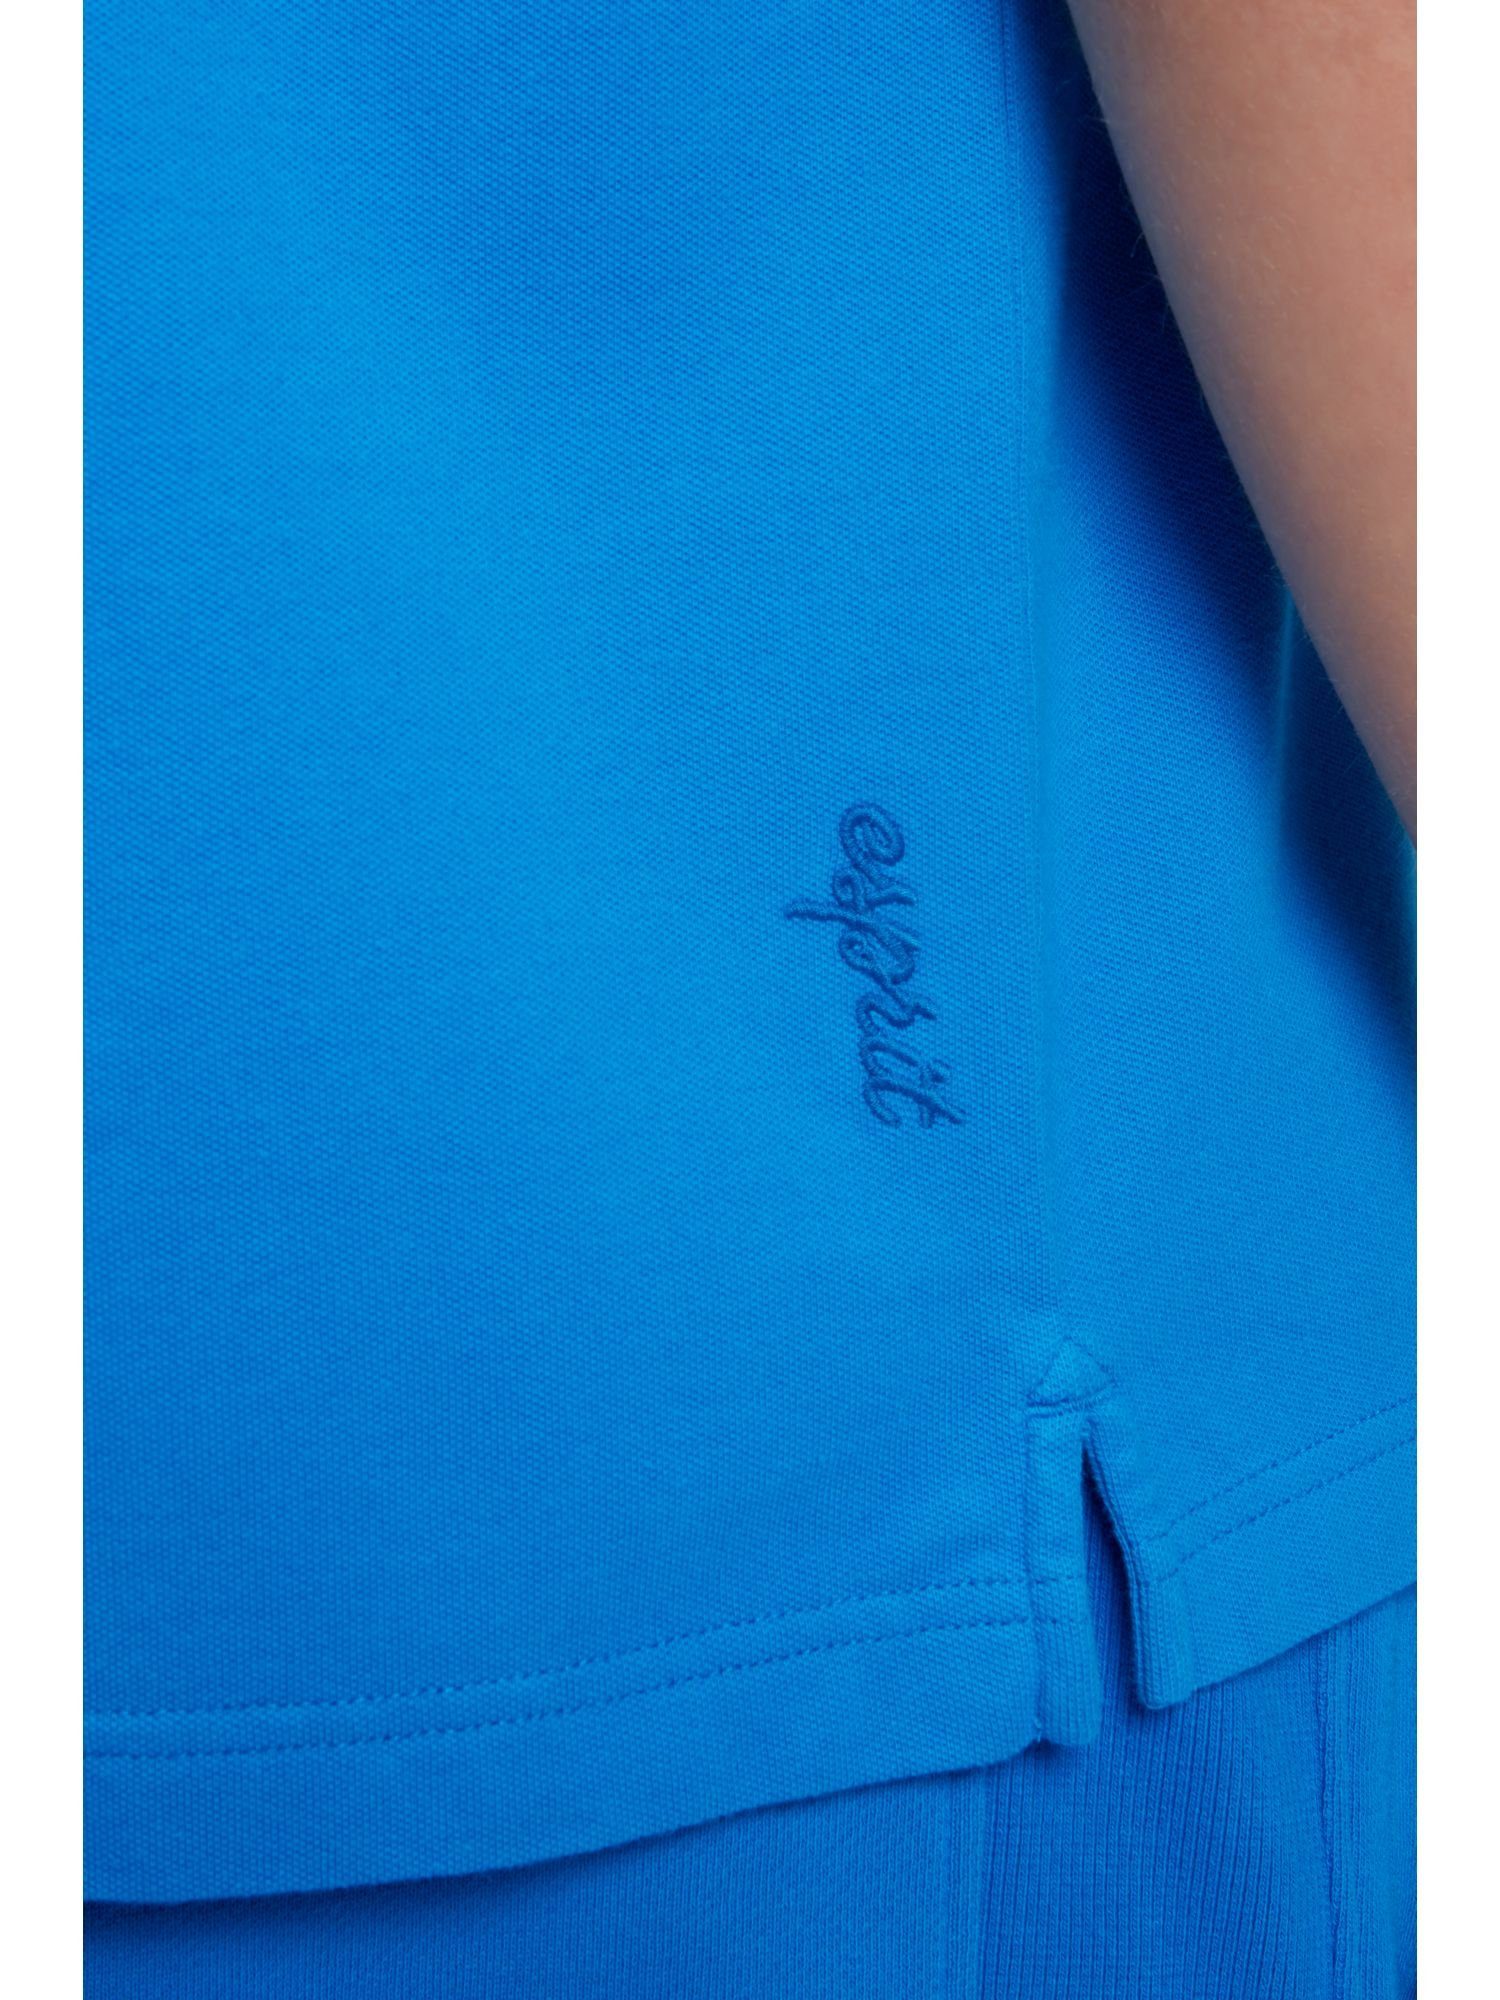 Tennis-Poloshirt Poloshirt mit BLUE Dolphin-Batch Klassisches Esprit